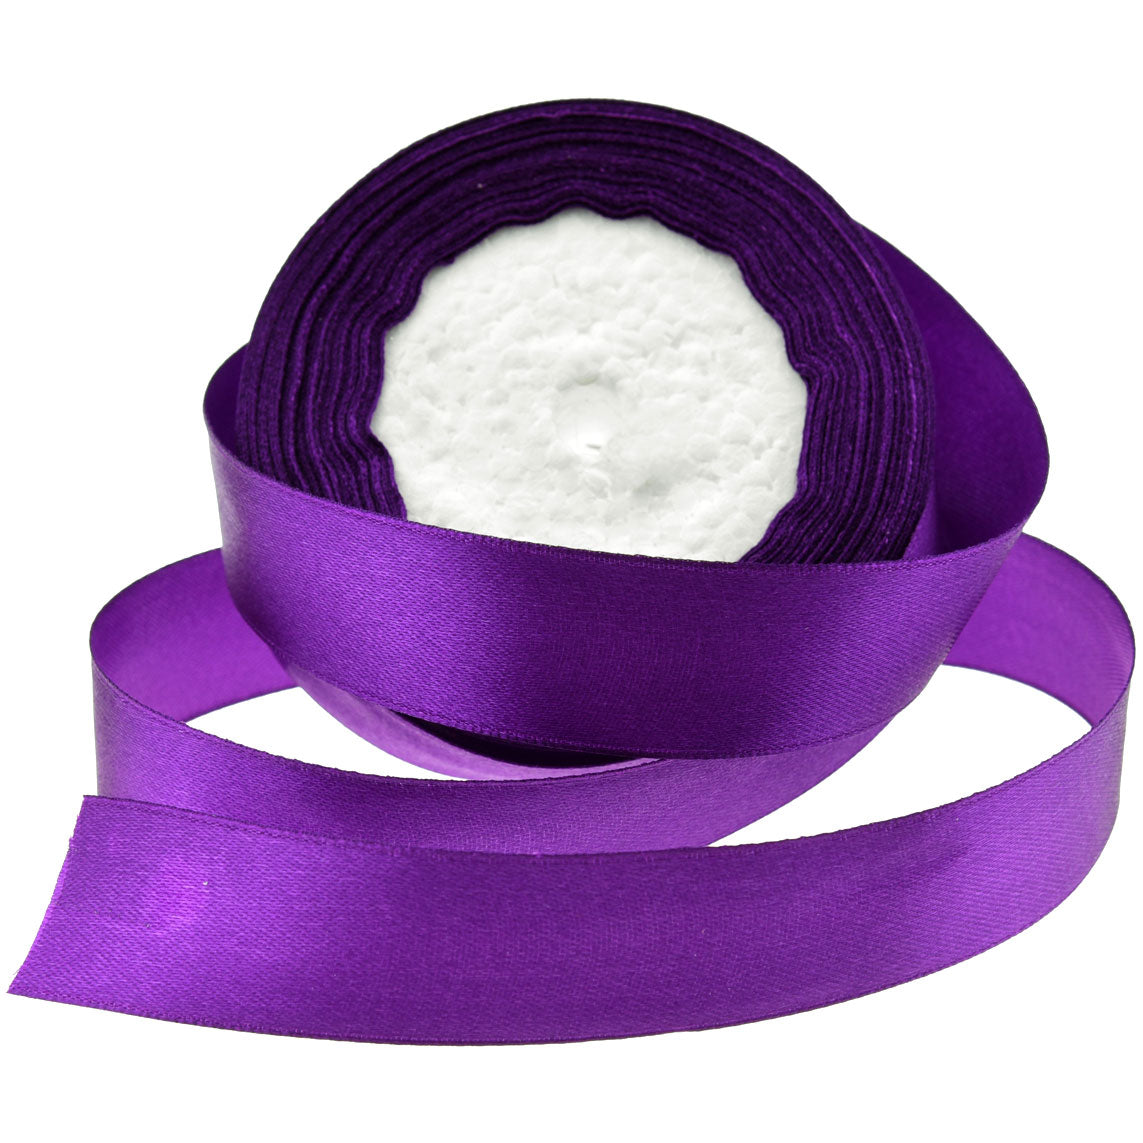 10mm Purple Single Sided Satin Ribbon